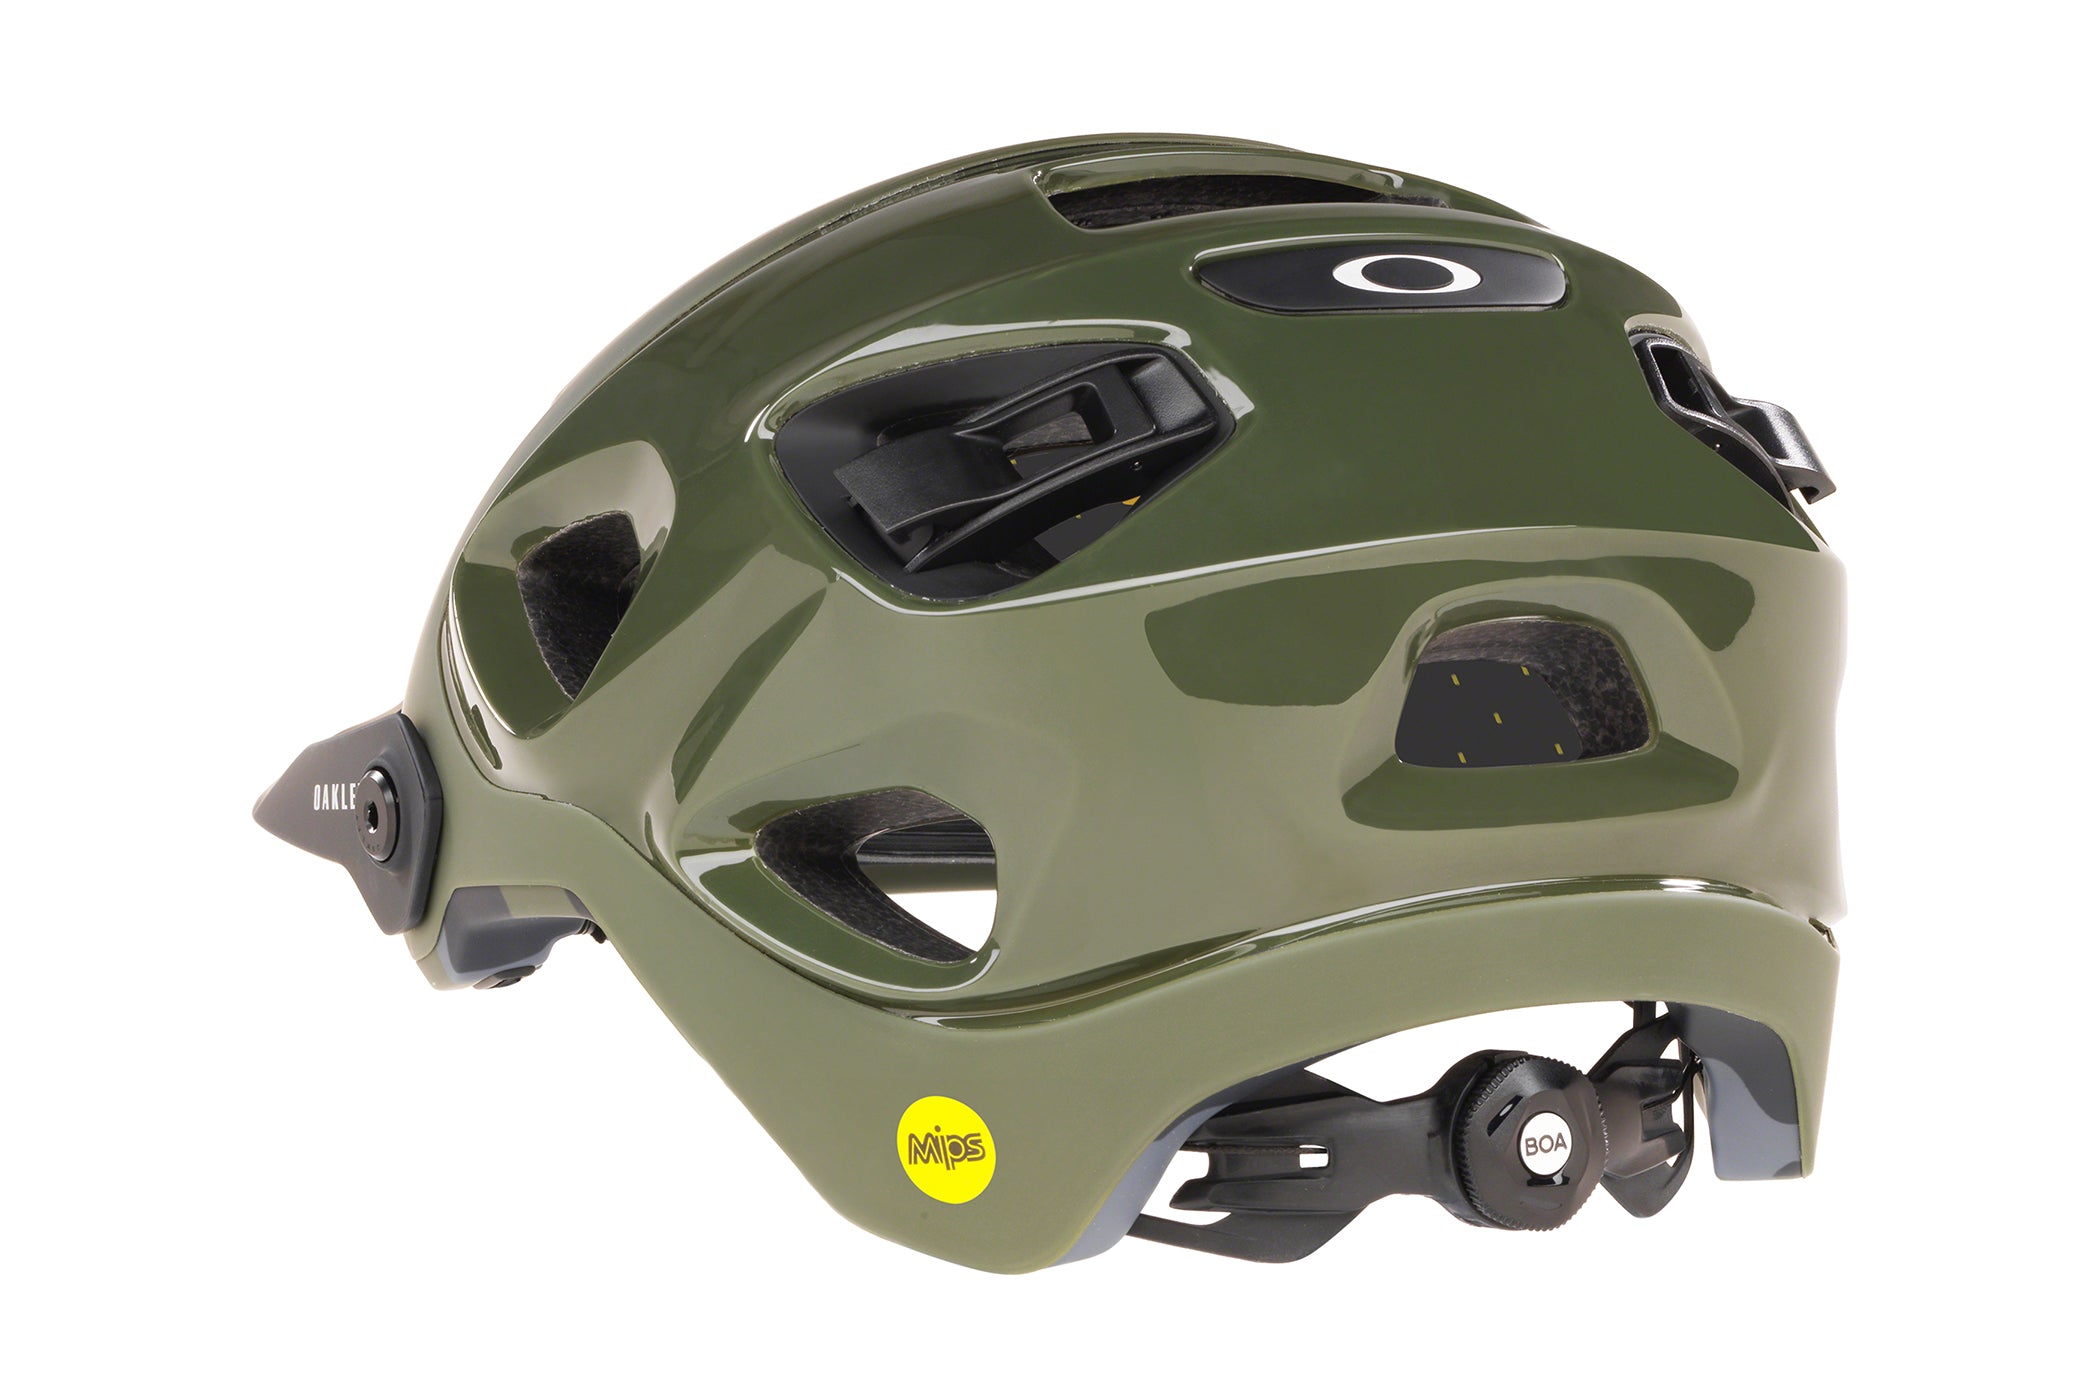 Oakley DRT5 Bike Helmet Dark Brush | The Pro's Closet